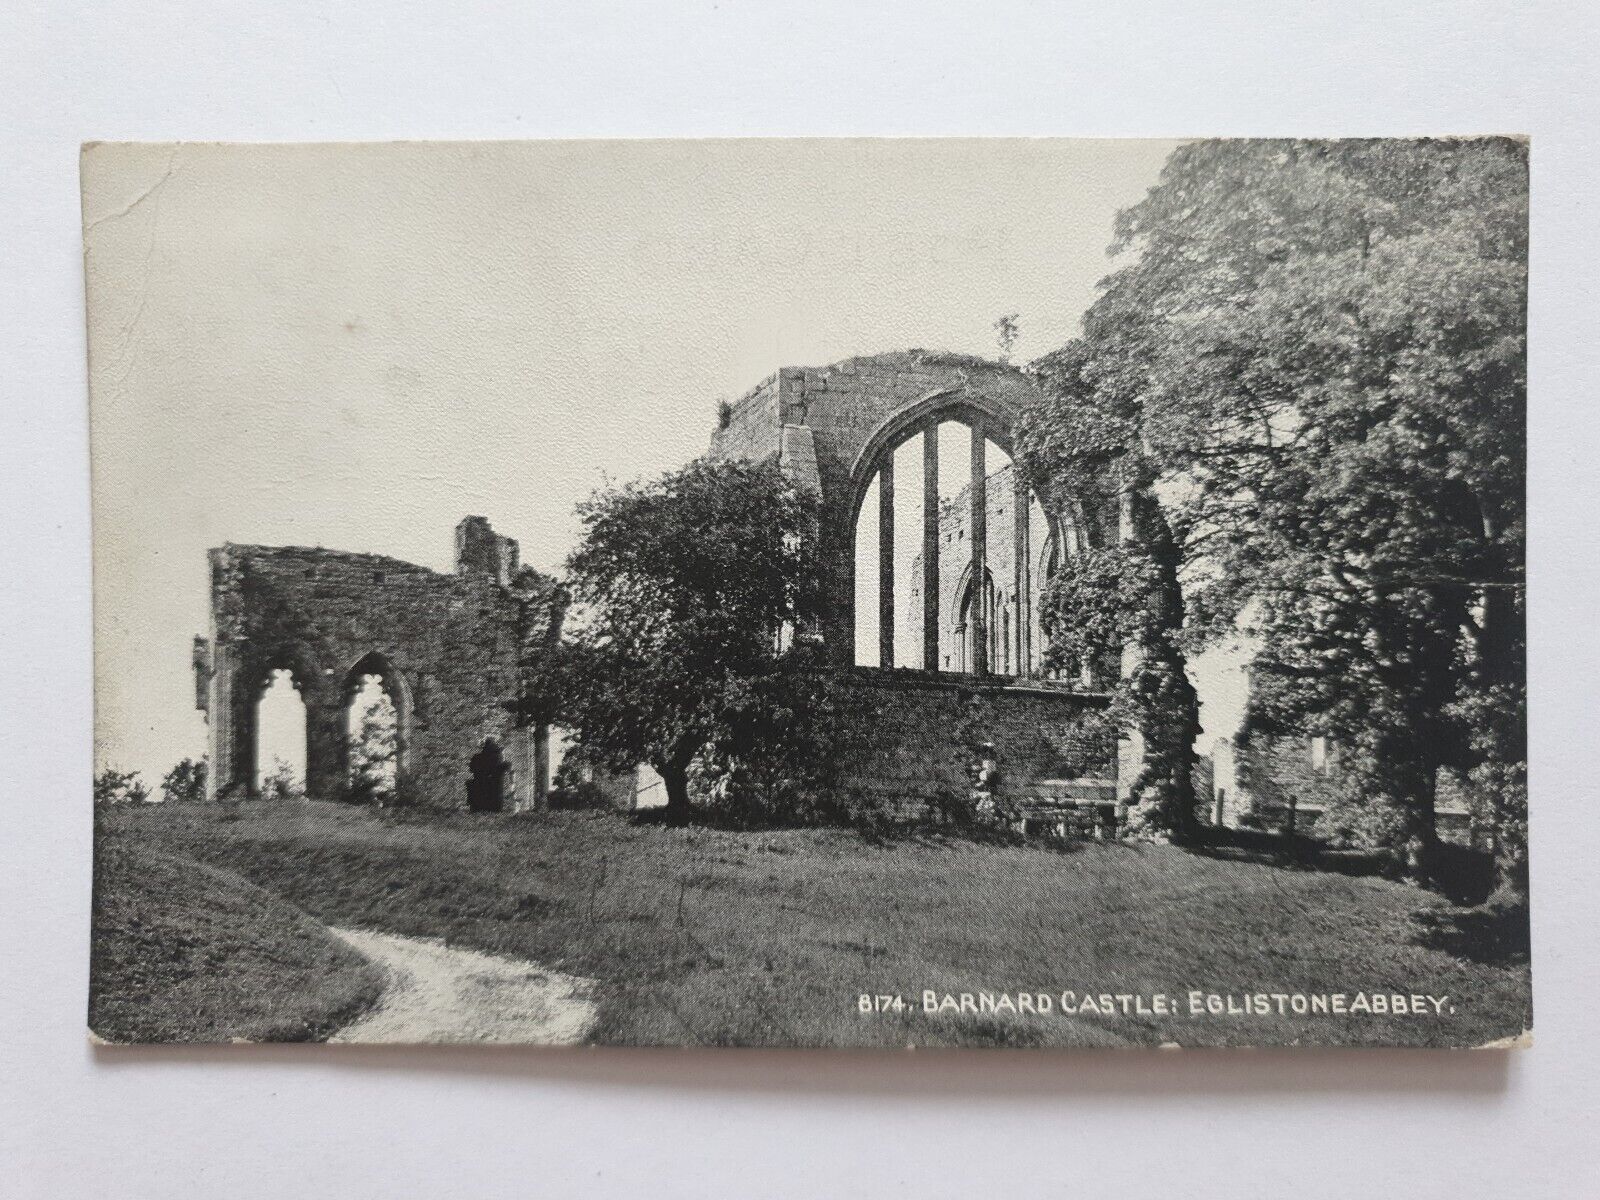 House Clearance - Eglistone Abbey, Barnard Castle, Durham, Old Service 1910s